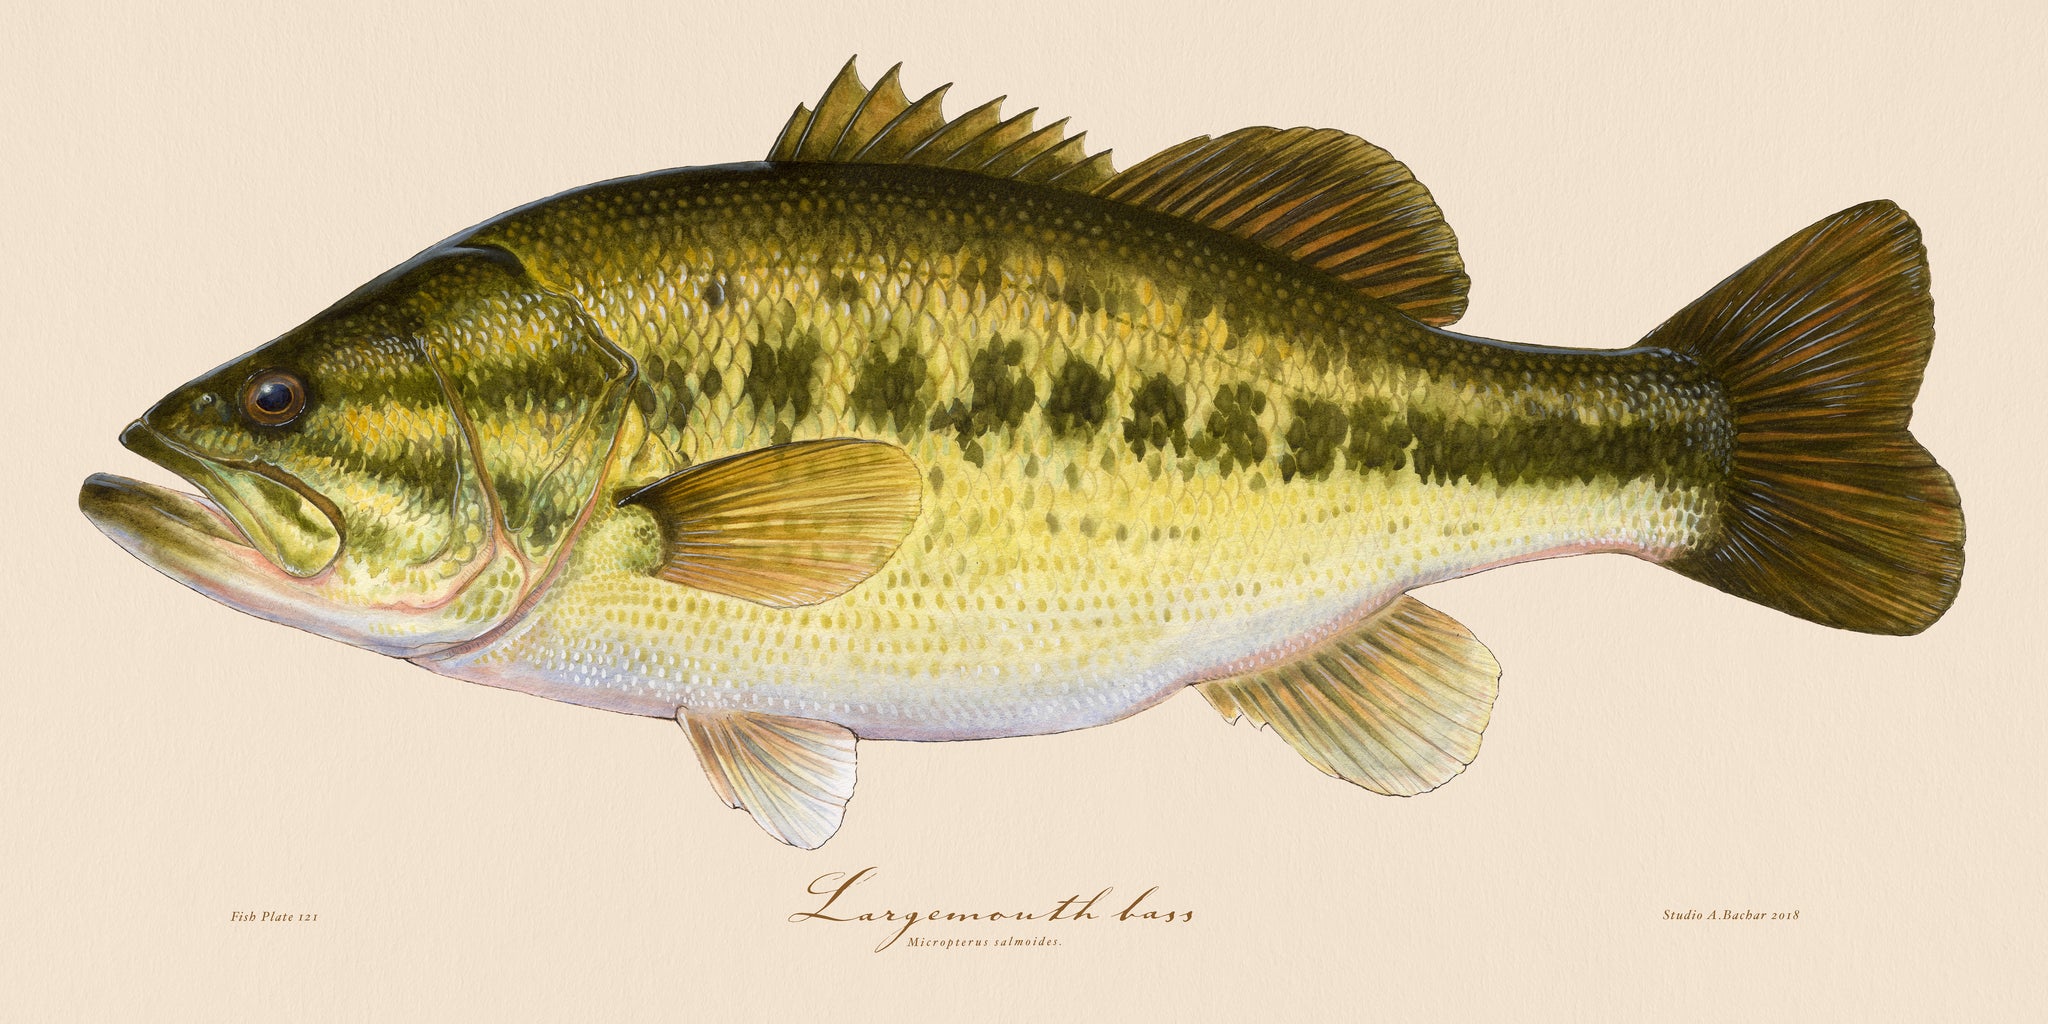 Largemouth bass Illustration 121